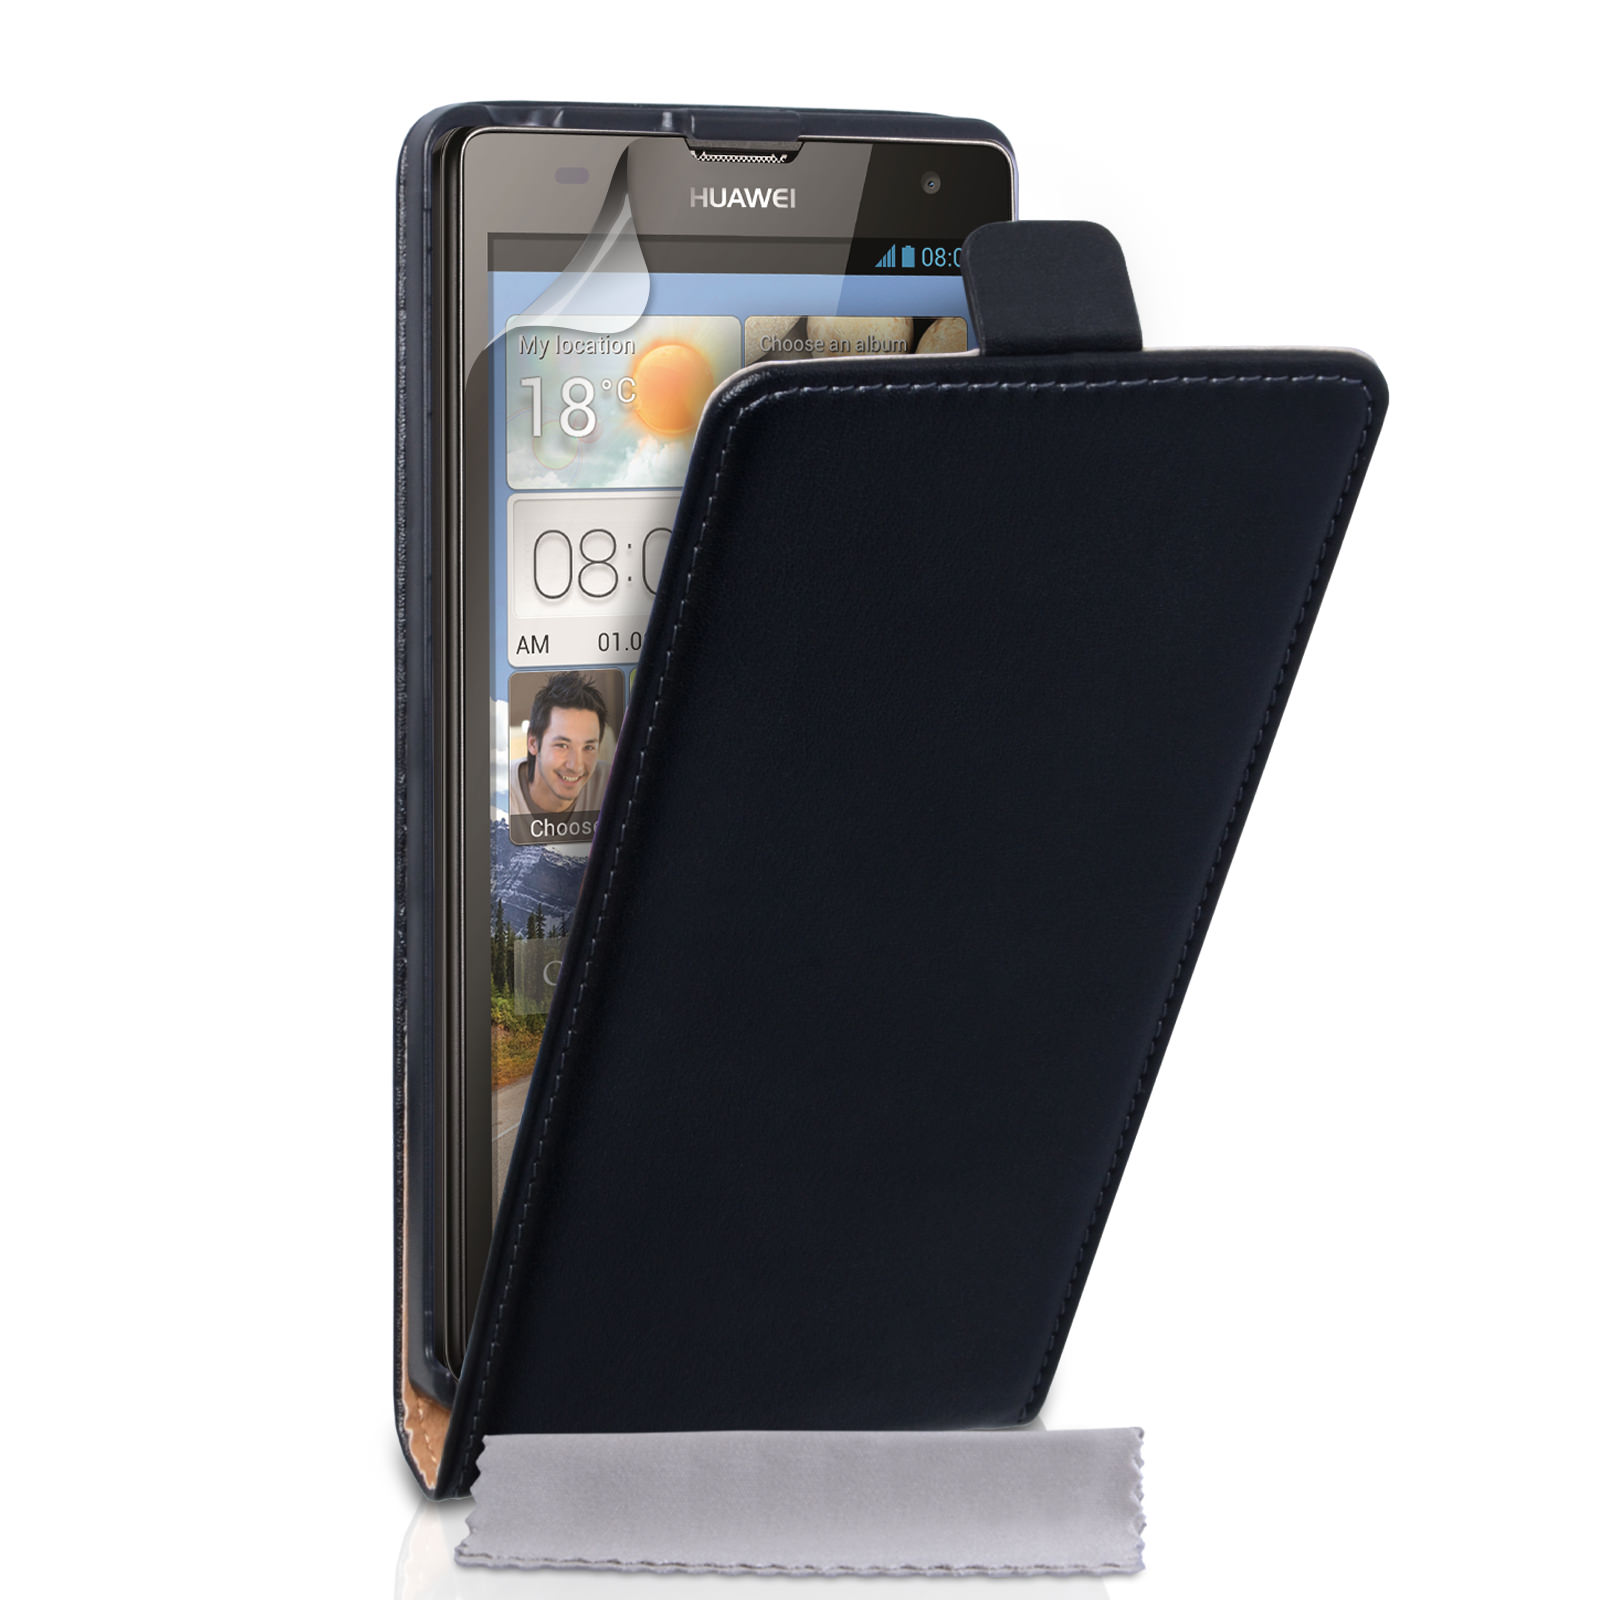 Caseflex Huawei Ascend G740 Real Leather Flip Case - Black